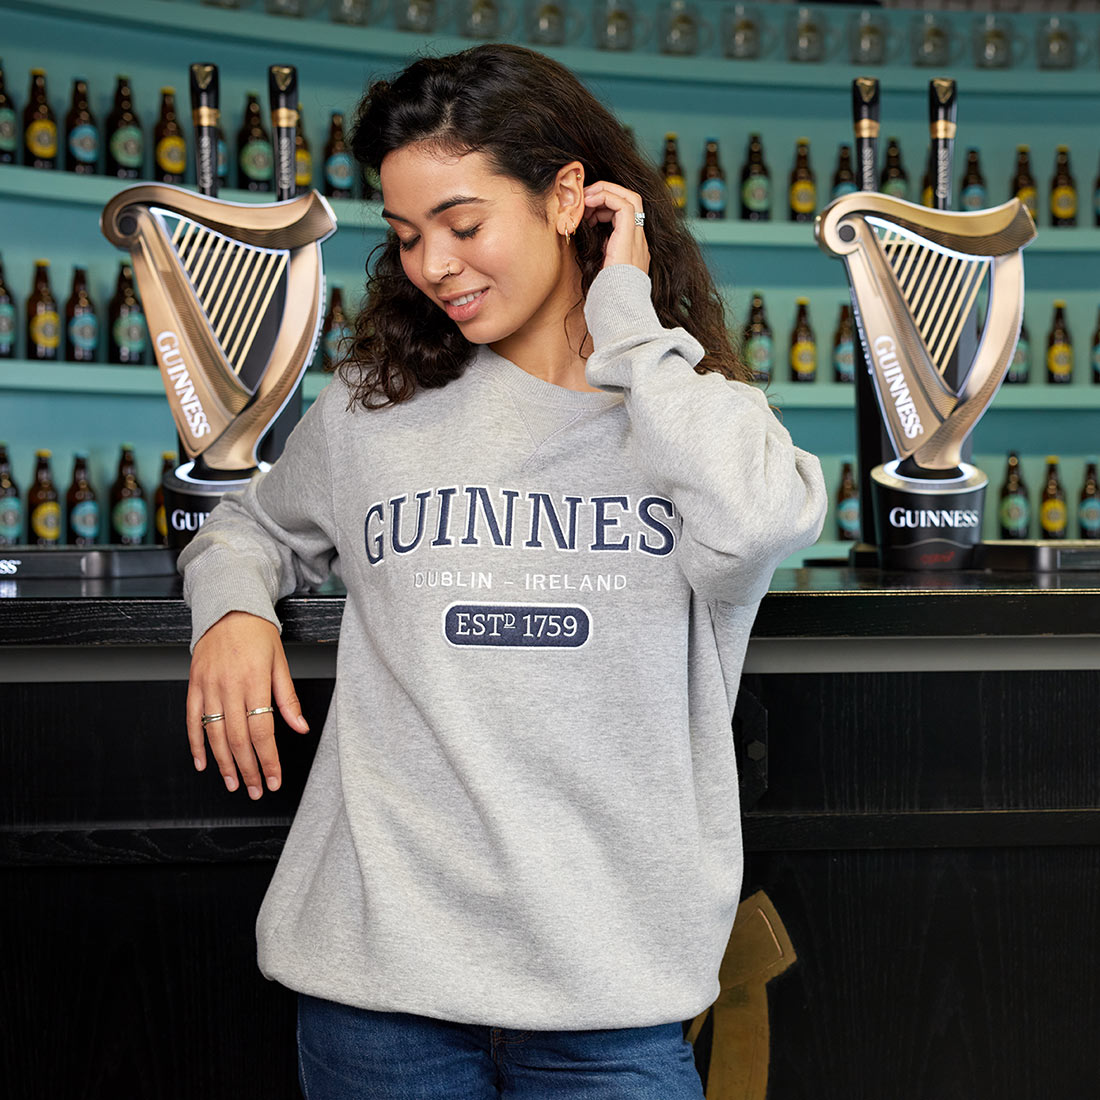 A woman wearing a Guinness Grey Crew Neck Sweatshirt leaning against a bar in Dublin, Ireland.